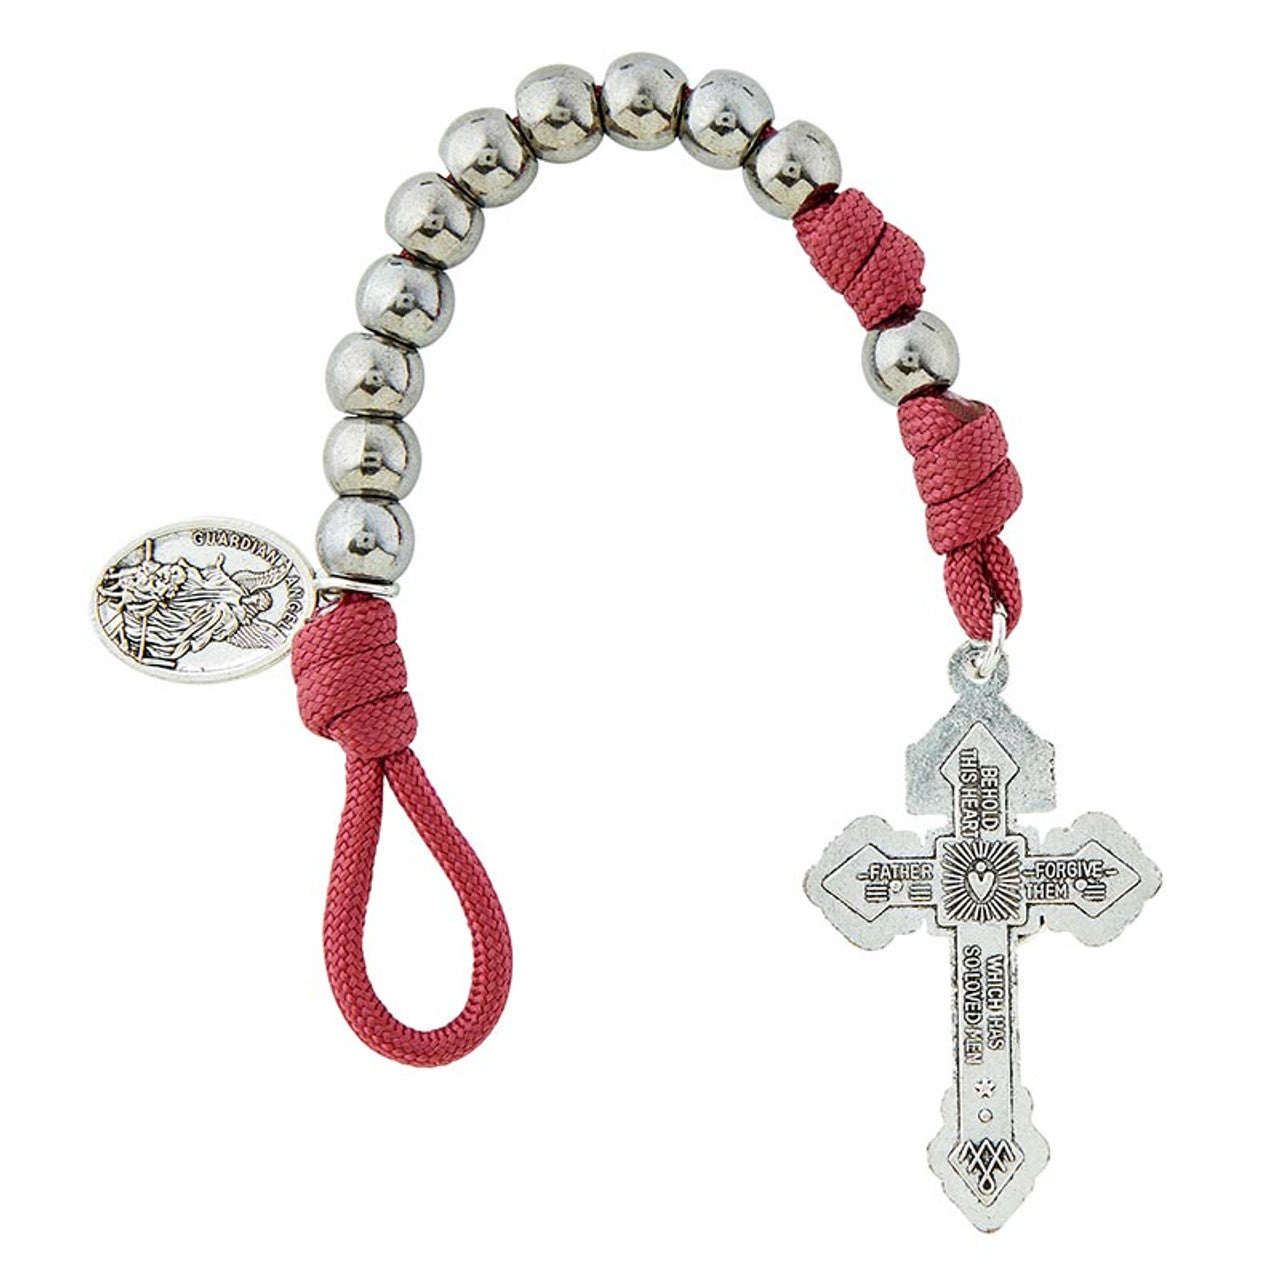 St Michael Decade Rosary